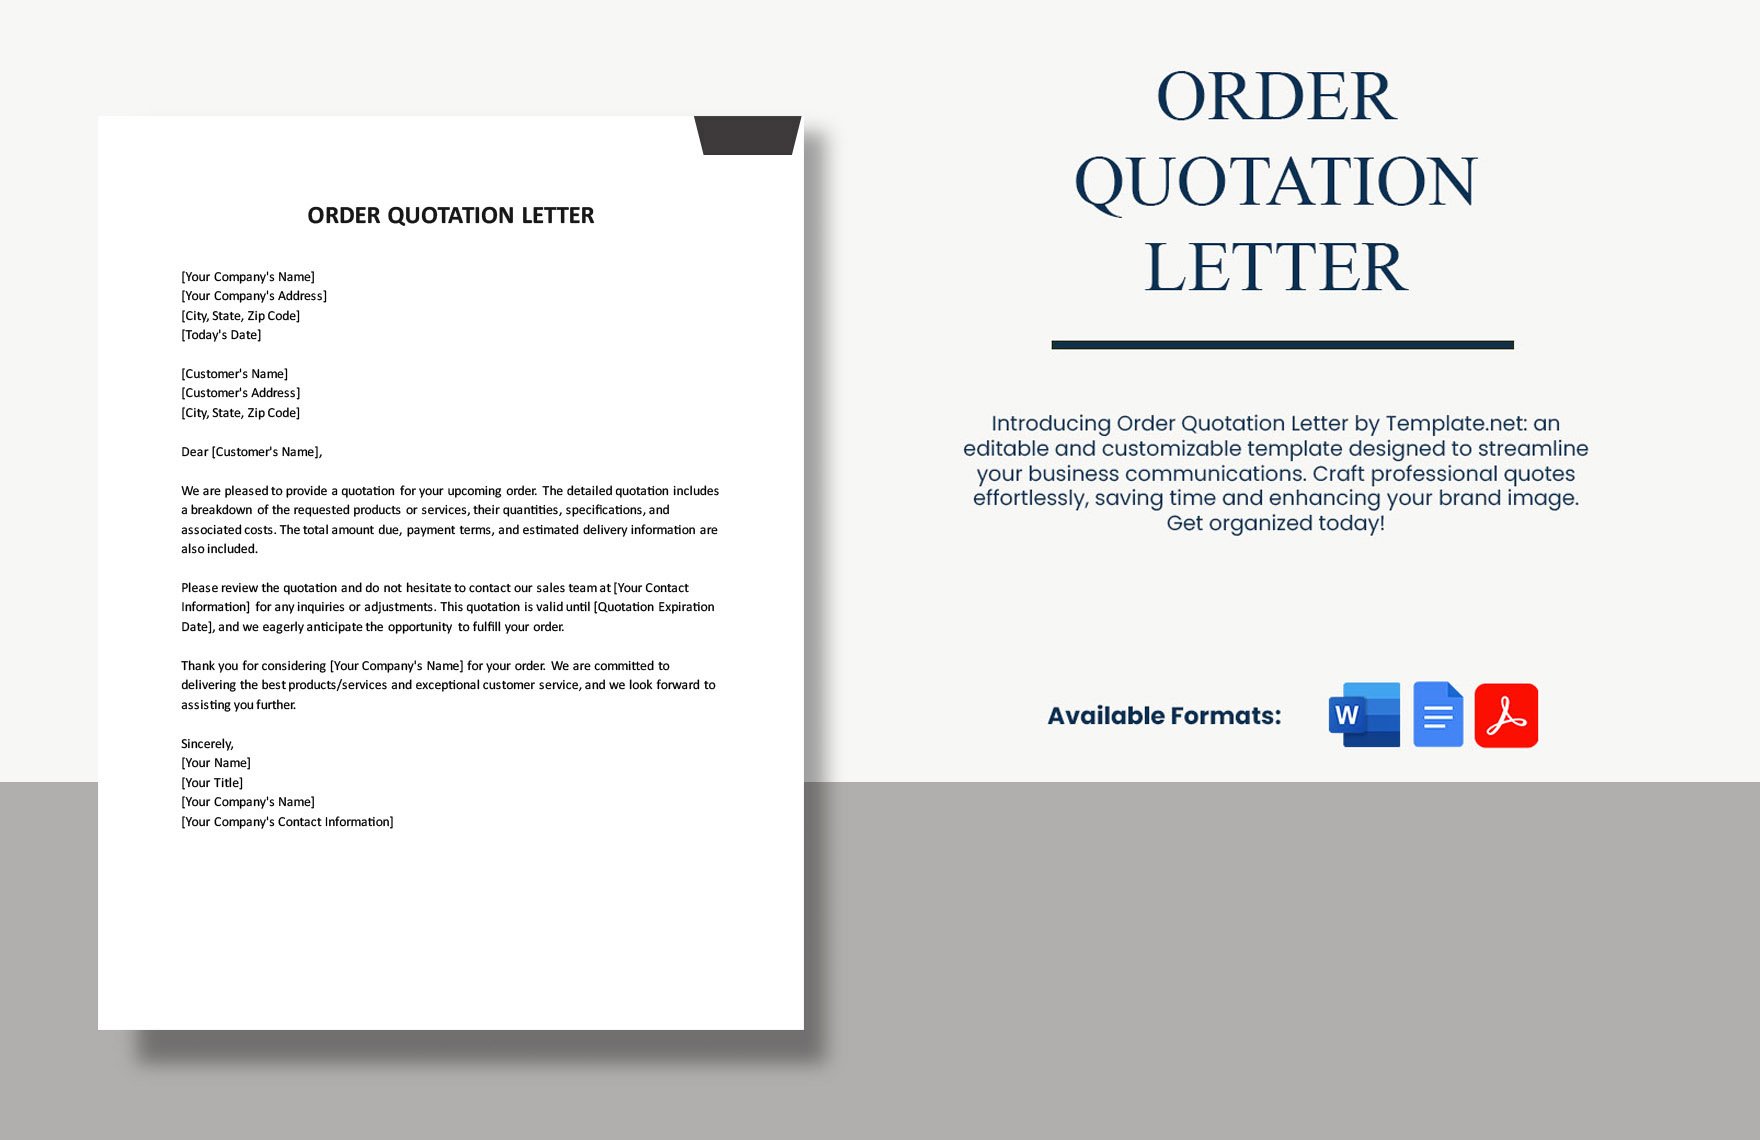 Order Quotation Letter in Word, Google Docs, PDF